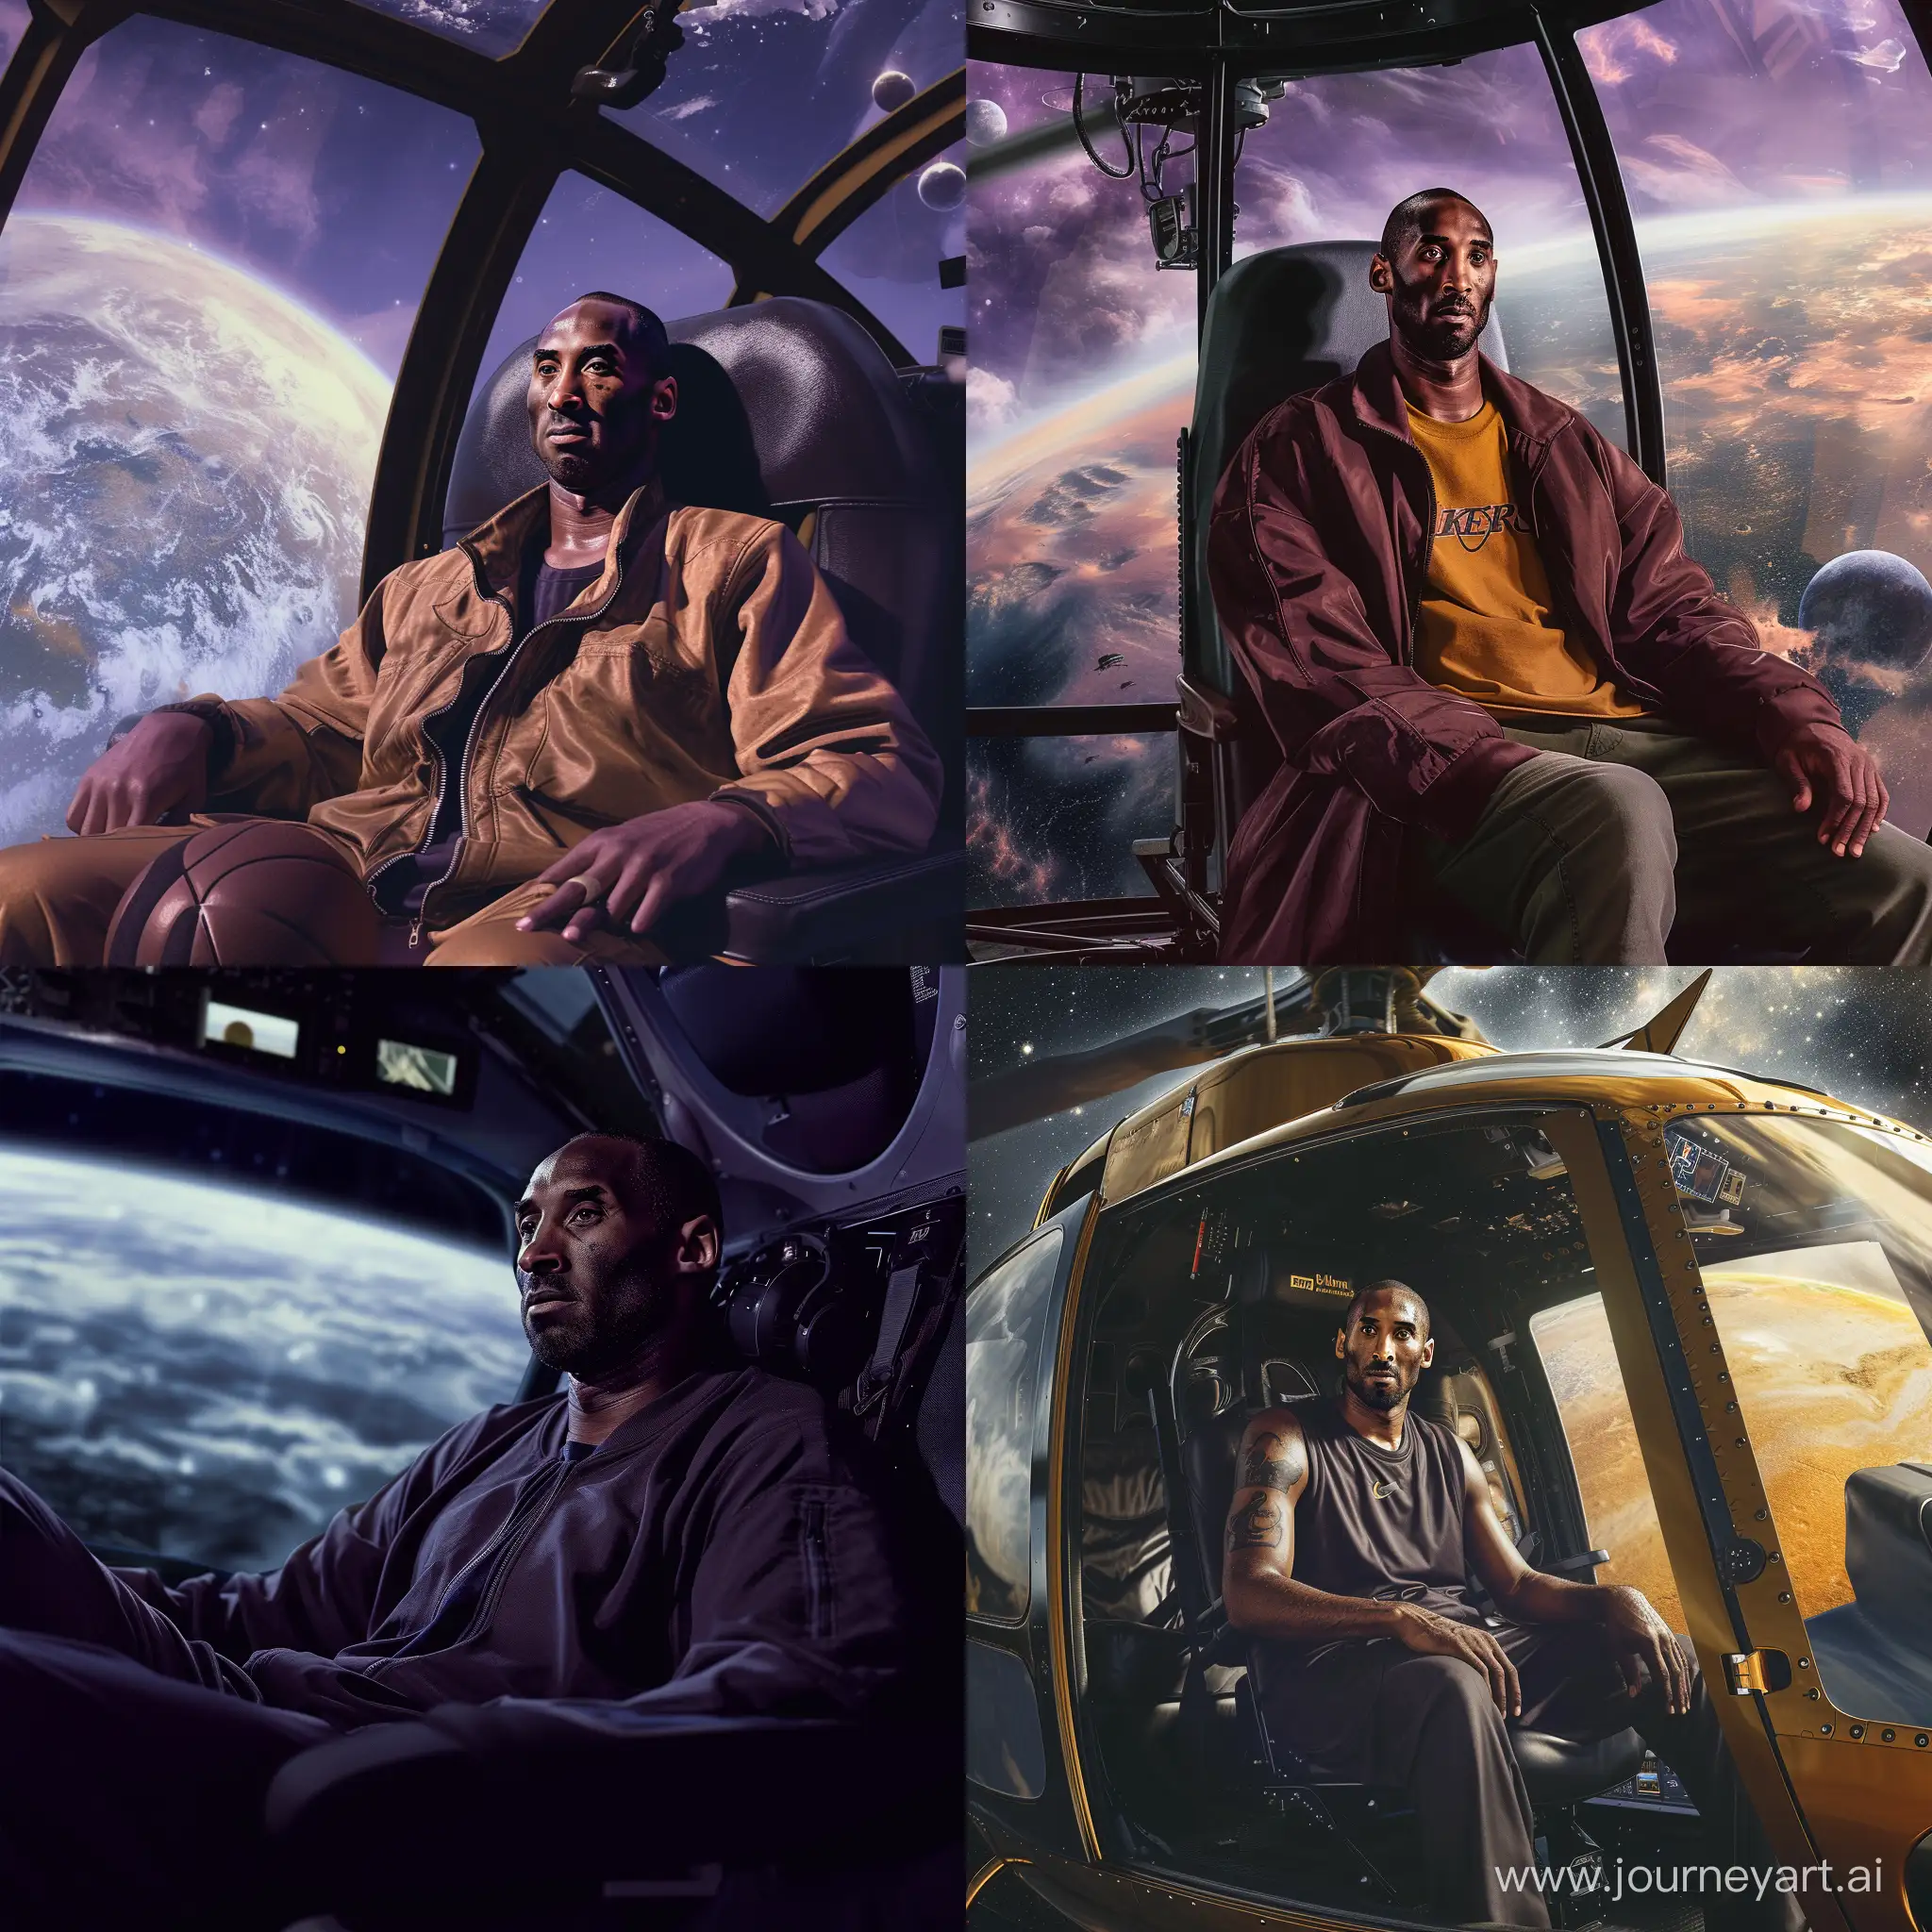 Kobe-Bryant-in-Helicopter-Realistic-Portrait-on-Alien-Planet